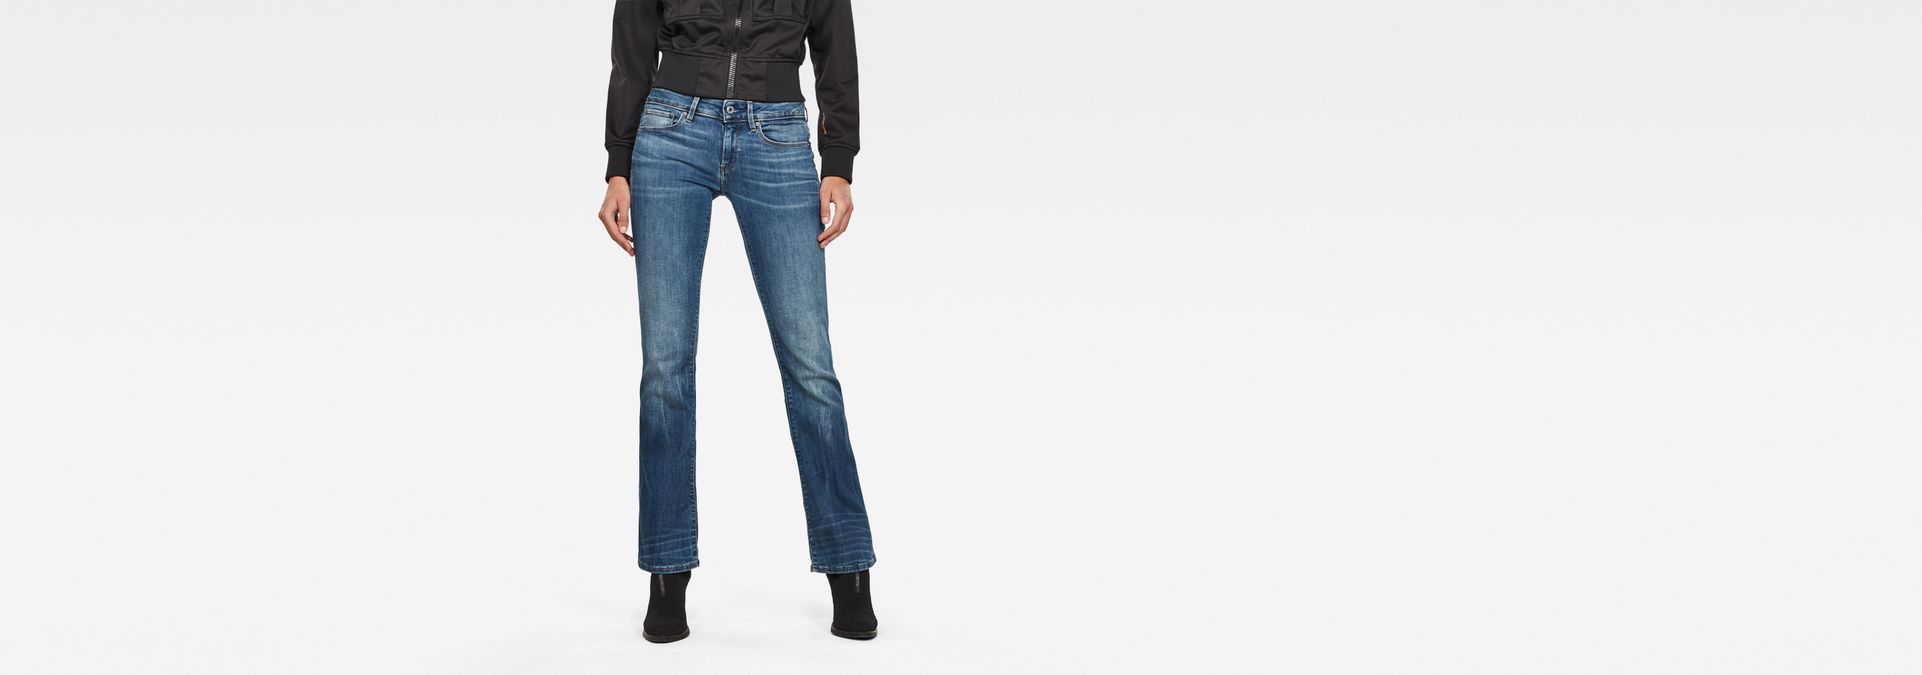 bootcut jeans greece